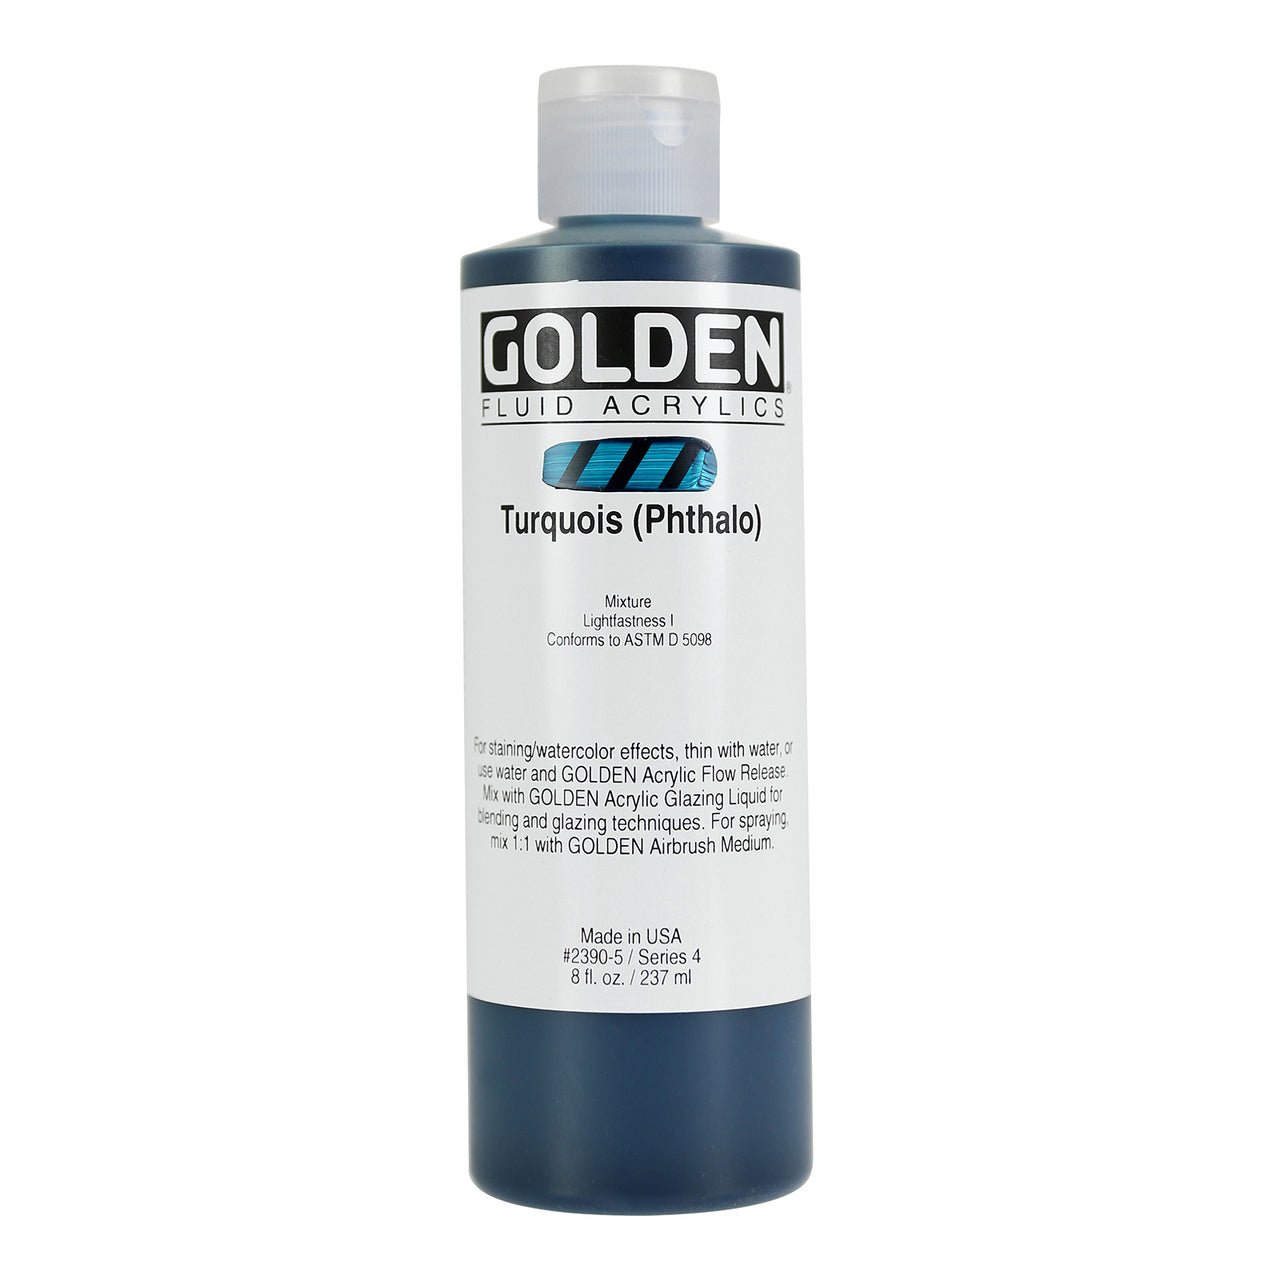 Golden Fluid Acrylic Turquoise (Phthalo) 8 oz - merriartist.com